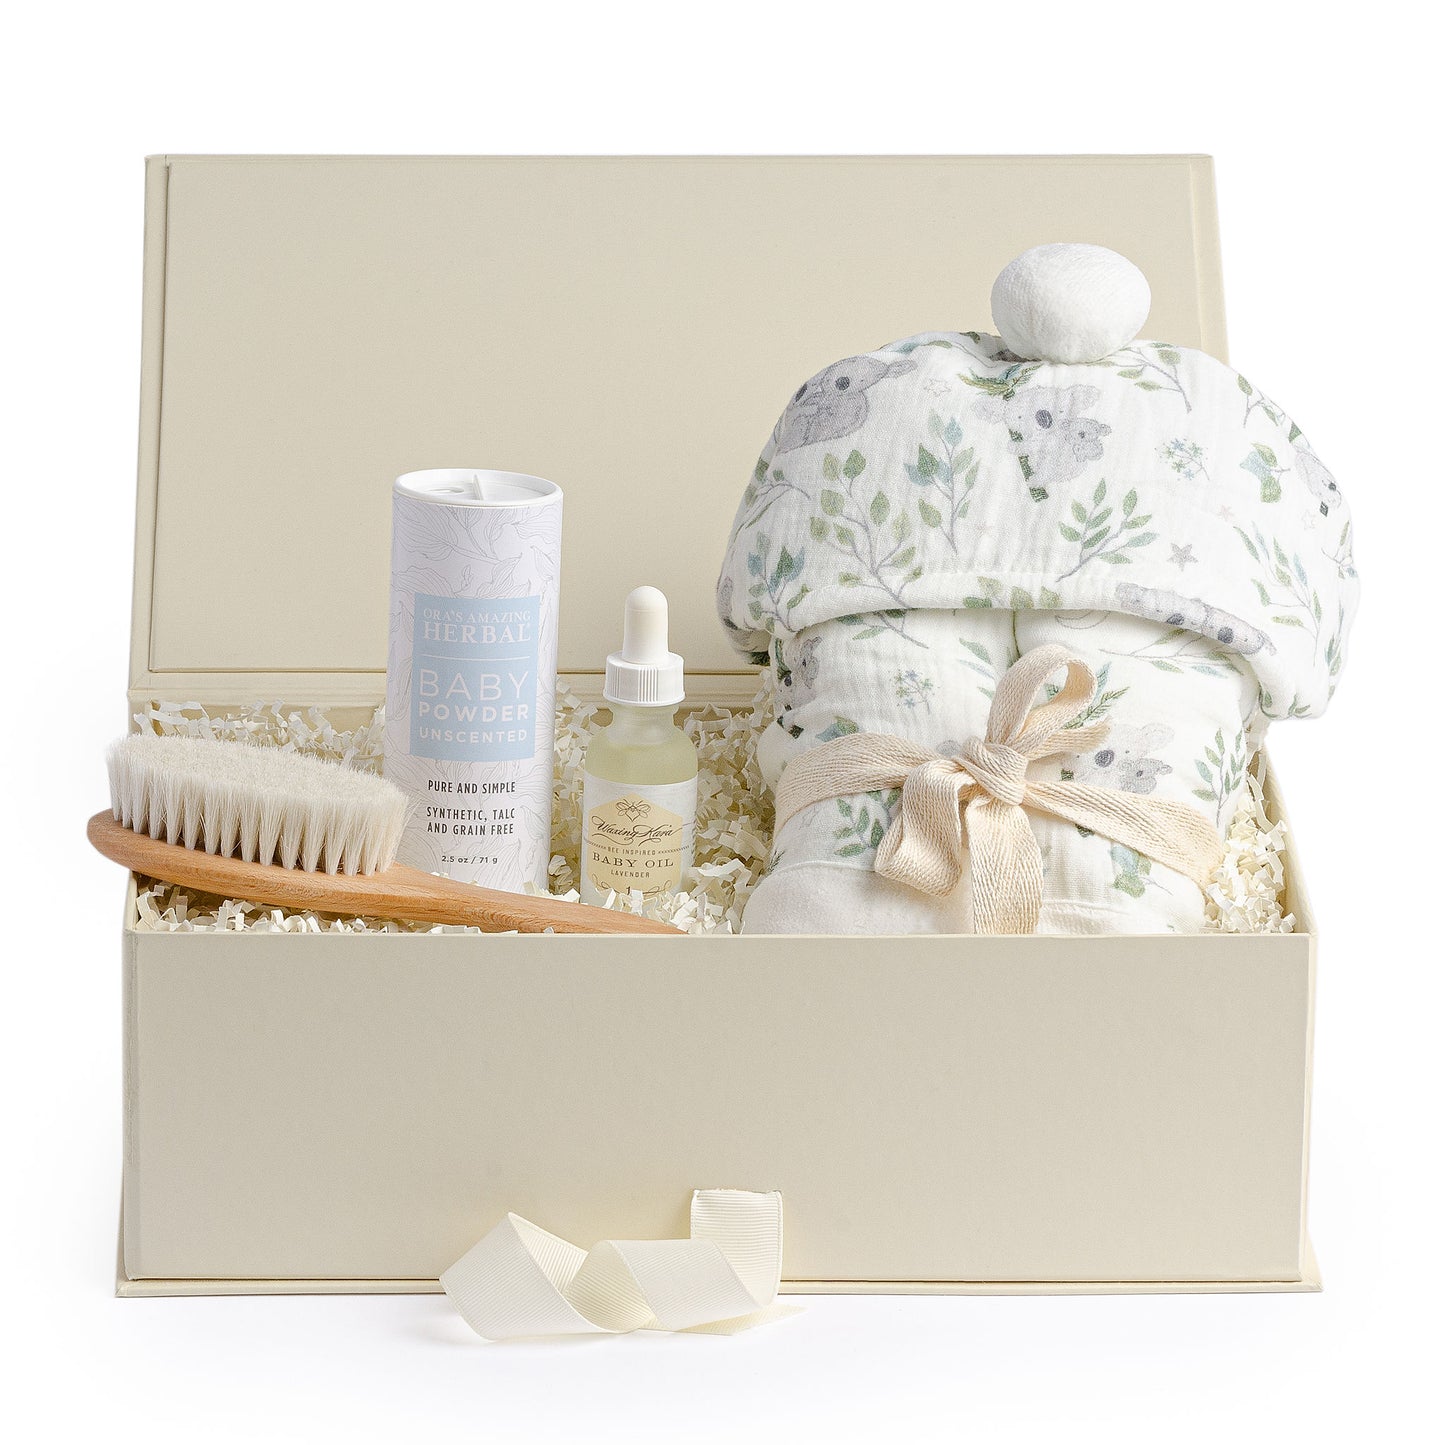 Baby bath gift set with a light blue koala print bath wrap, baby oil, organic baby powder and a wooden hair brush.